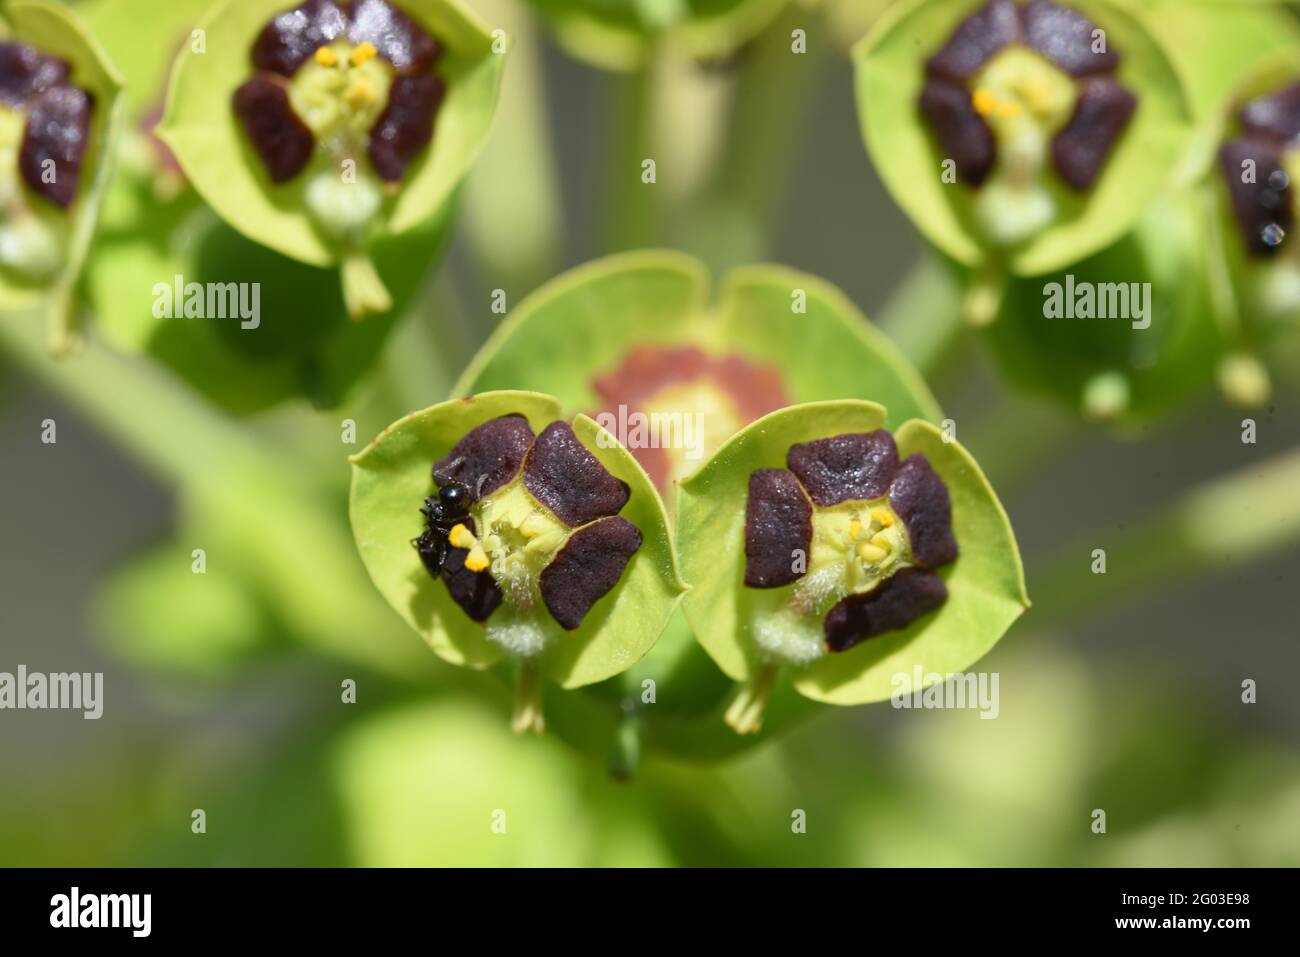 Detail Showing Nectar Glands in the Cyathia or Bracteoles of Mediterranean Spurge, aka Albanian Spurge, Euphorbia characias Stock Photo